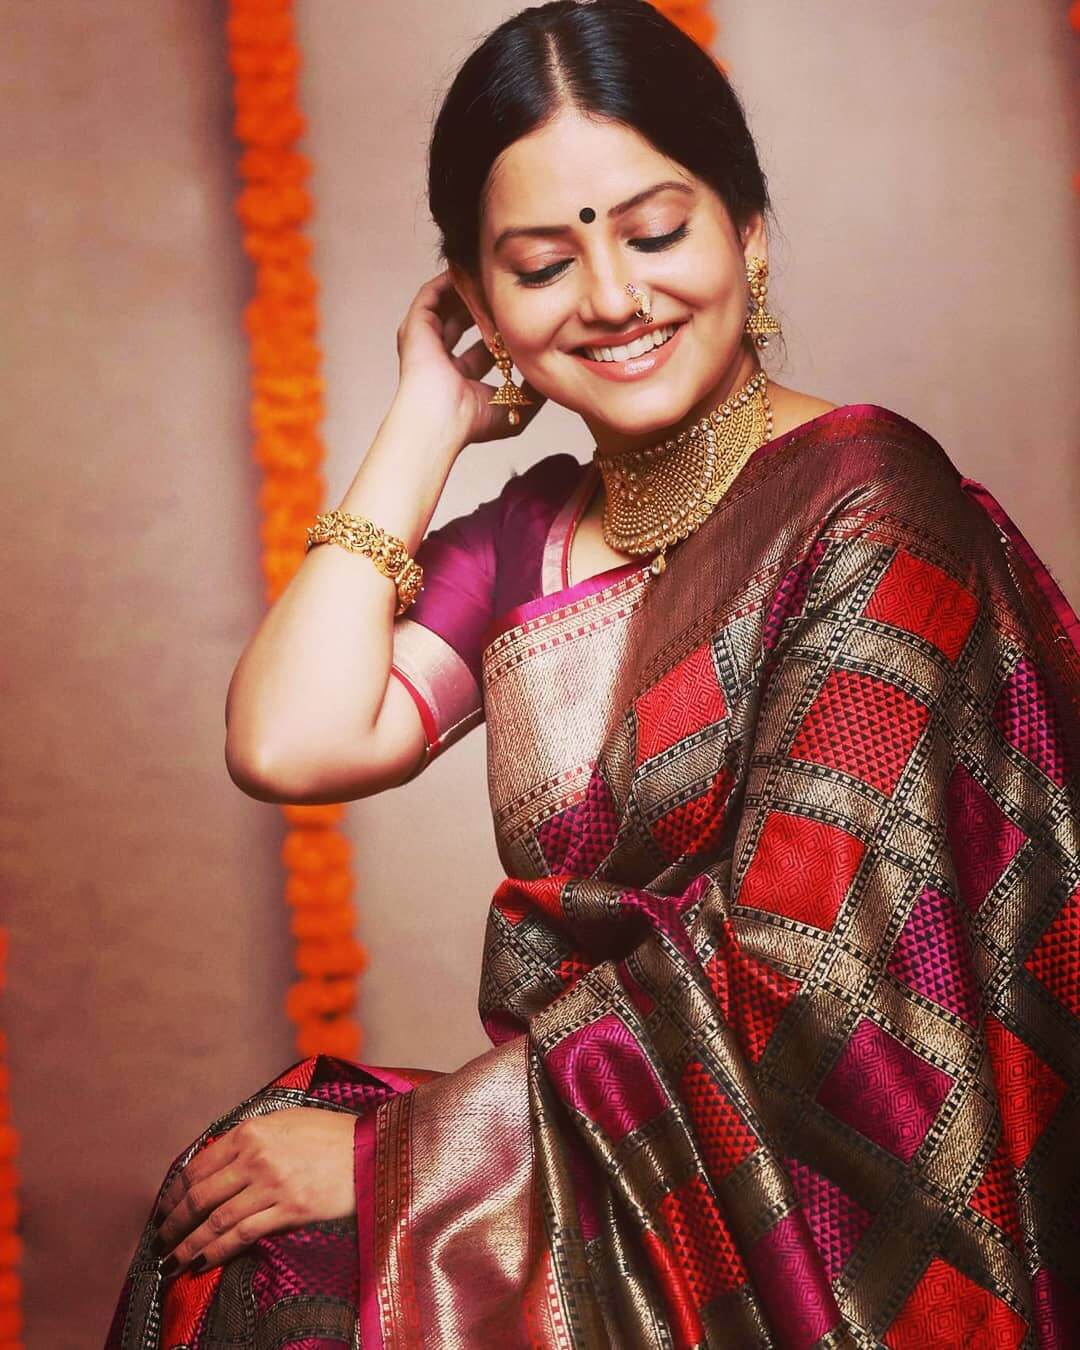 Kadambari Kadam Outfit Look Beautiful In Traditional Saree Look With Gold Jewellery